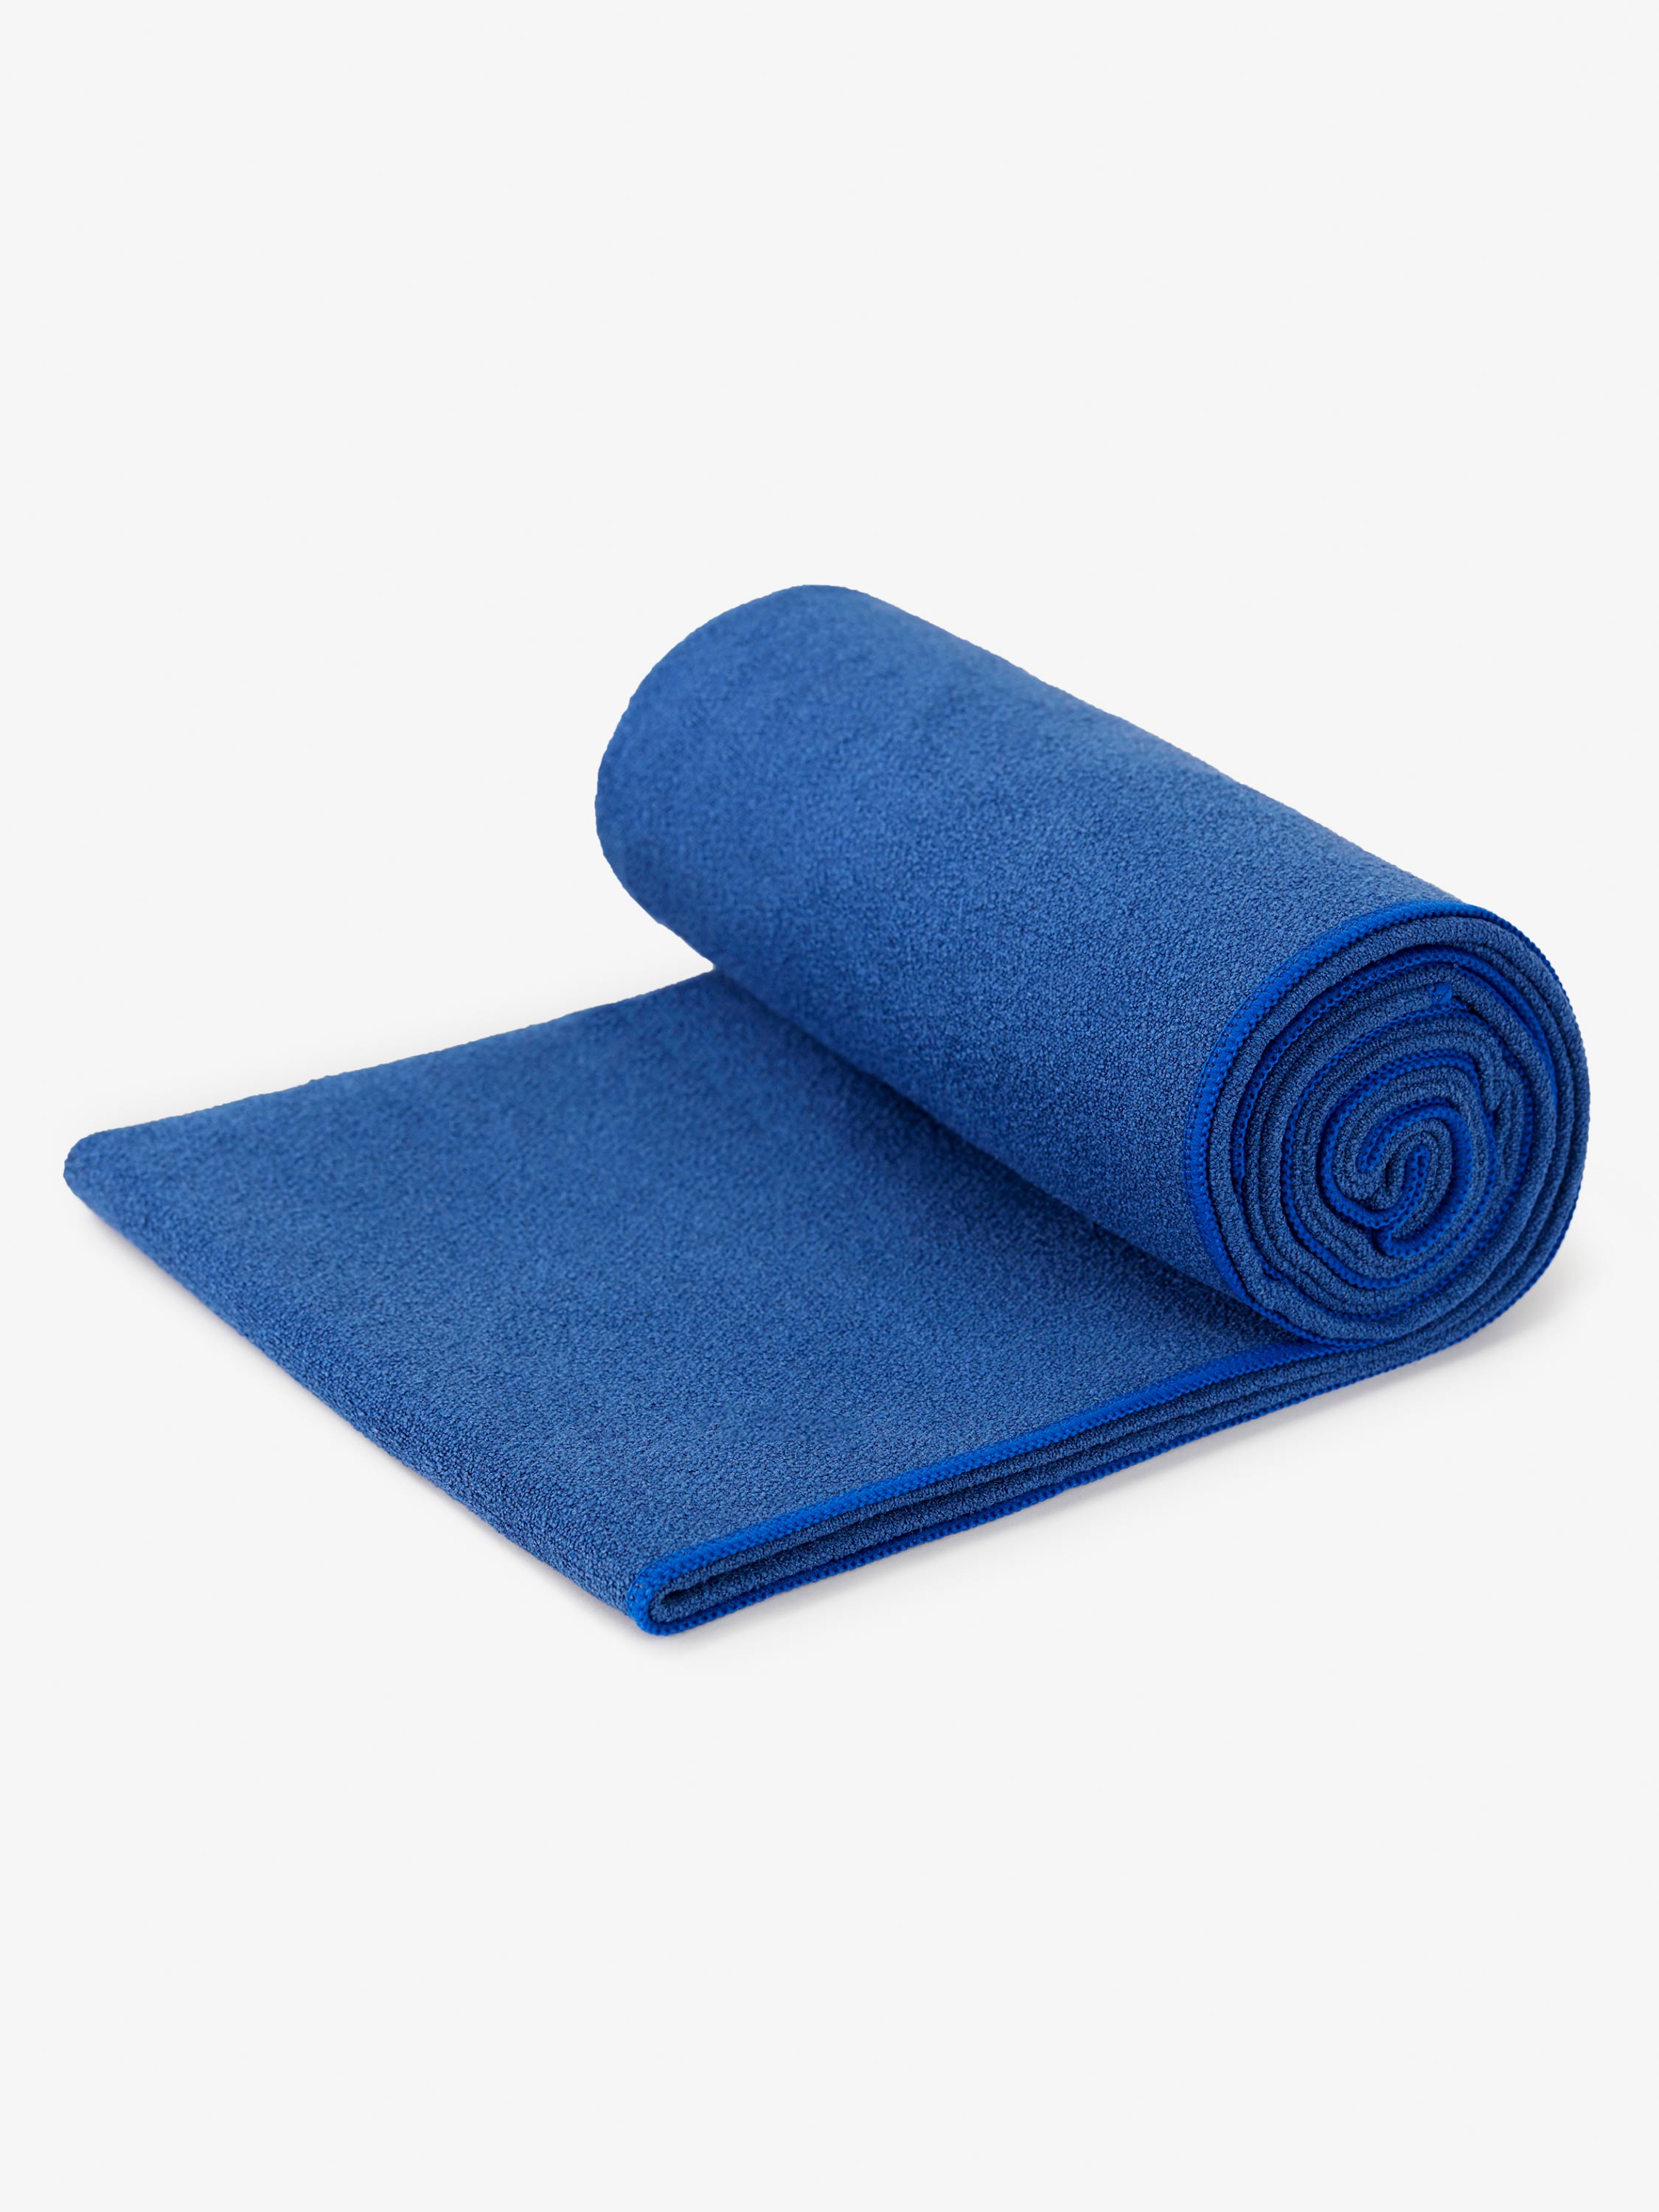 Yogitoes Yoga Mat Towel - Midnight Blue - Sustainable Travel & Living